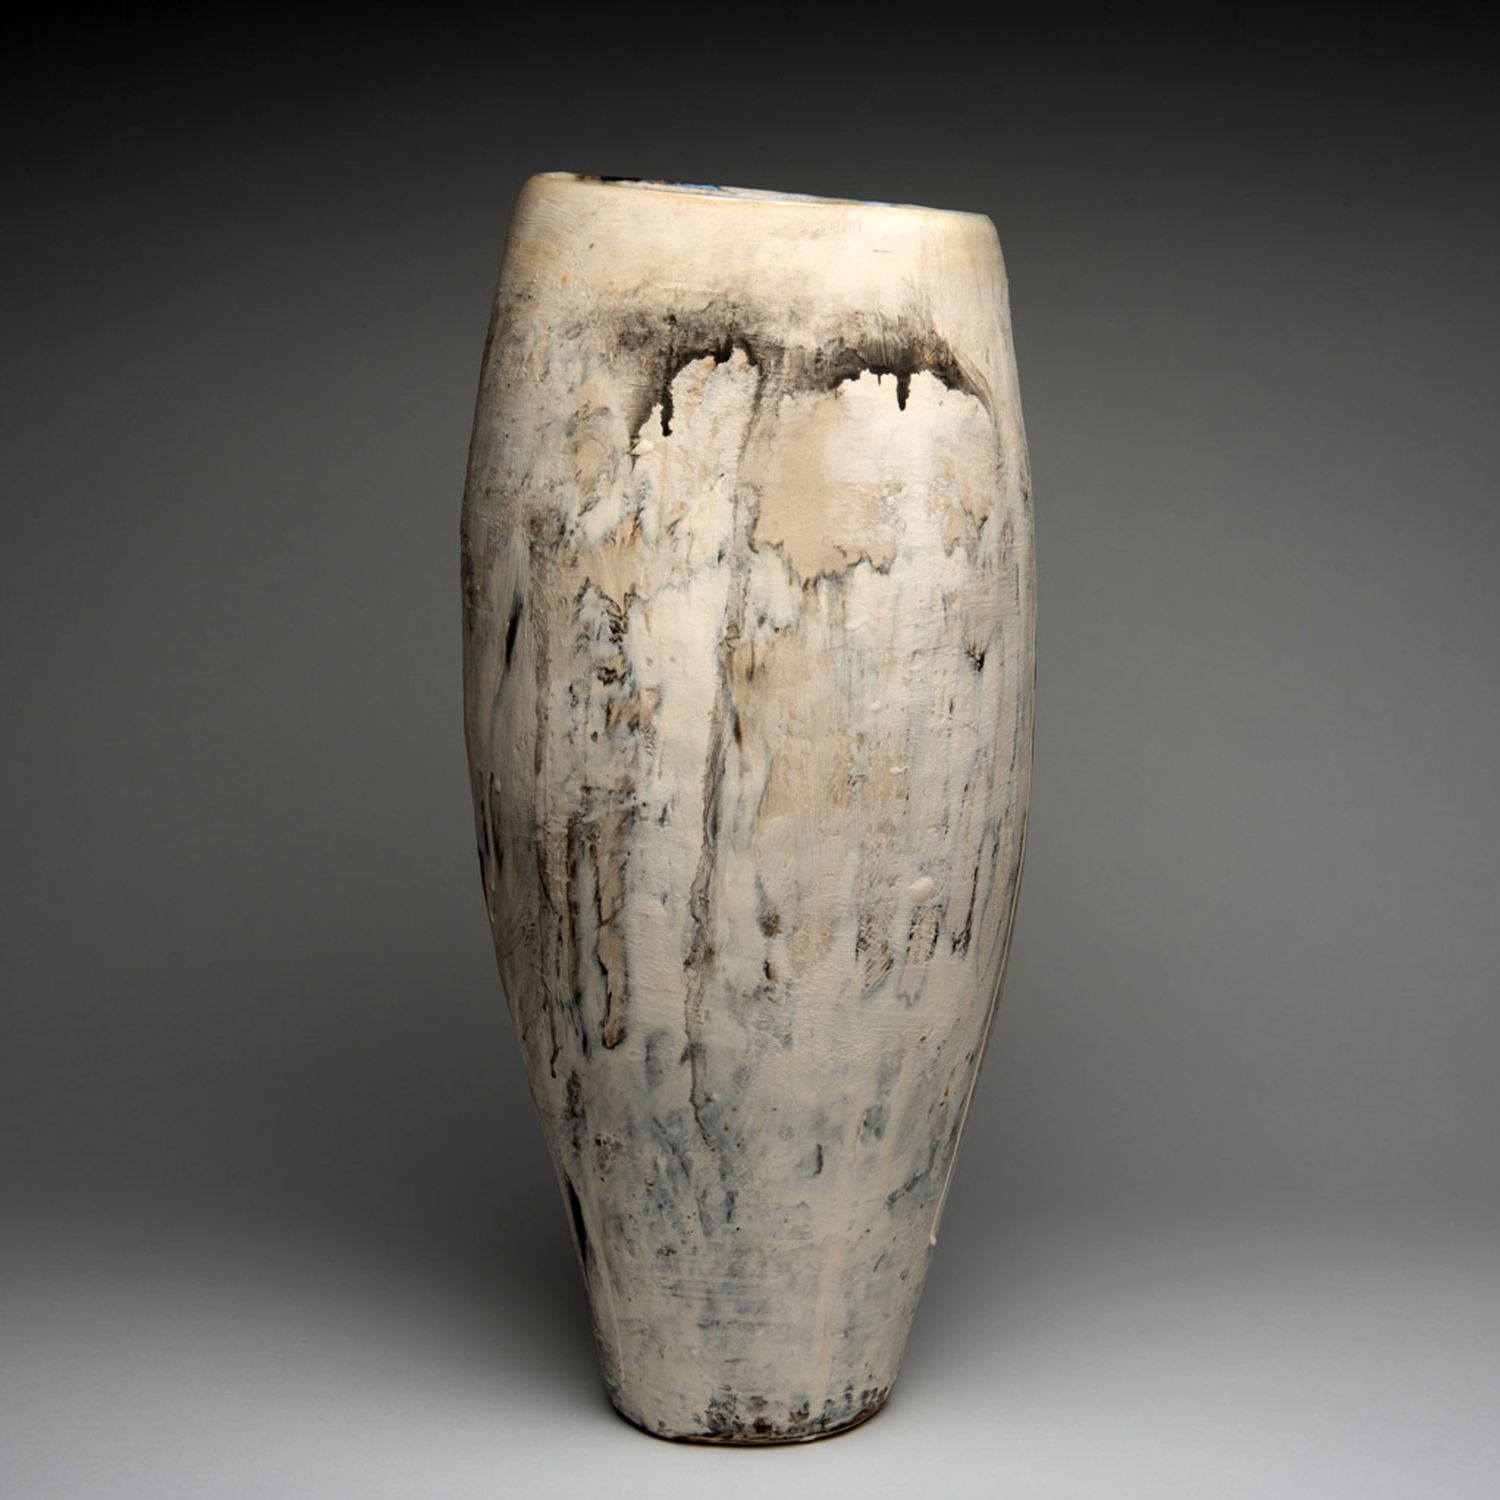 Lindsay Gravelle: Slip Vase Product Image 2 of 2